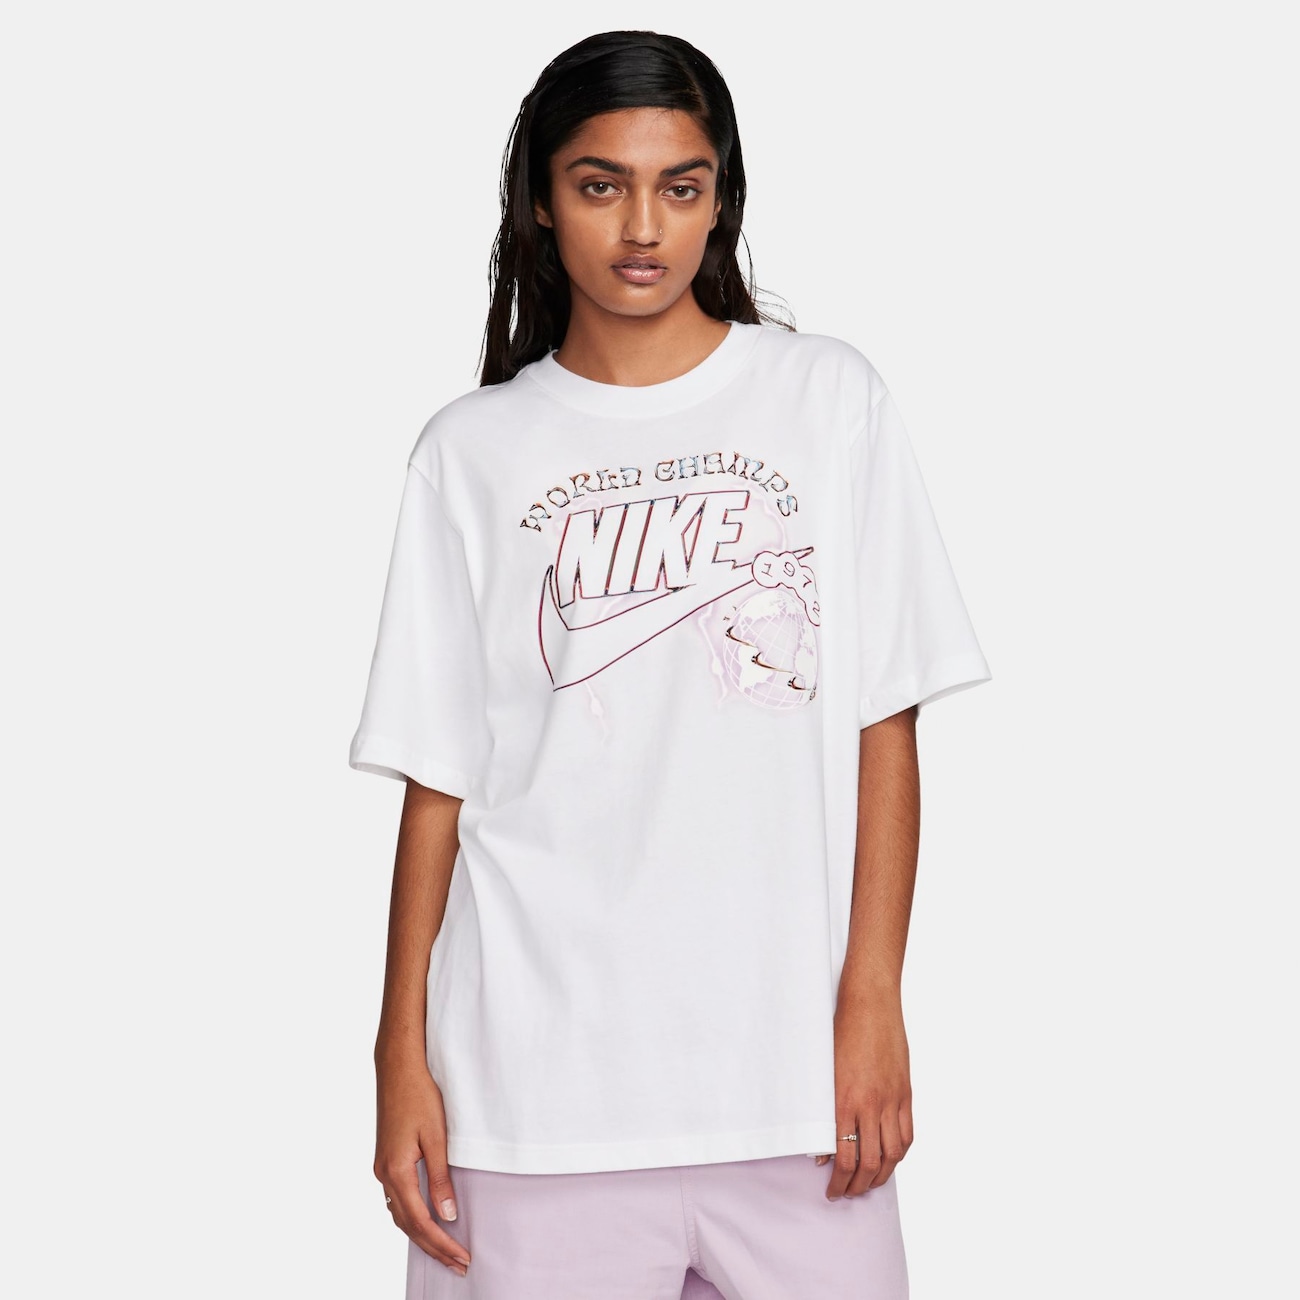 Nike Sportswear-T-shirt til kvinder - hvid